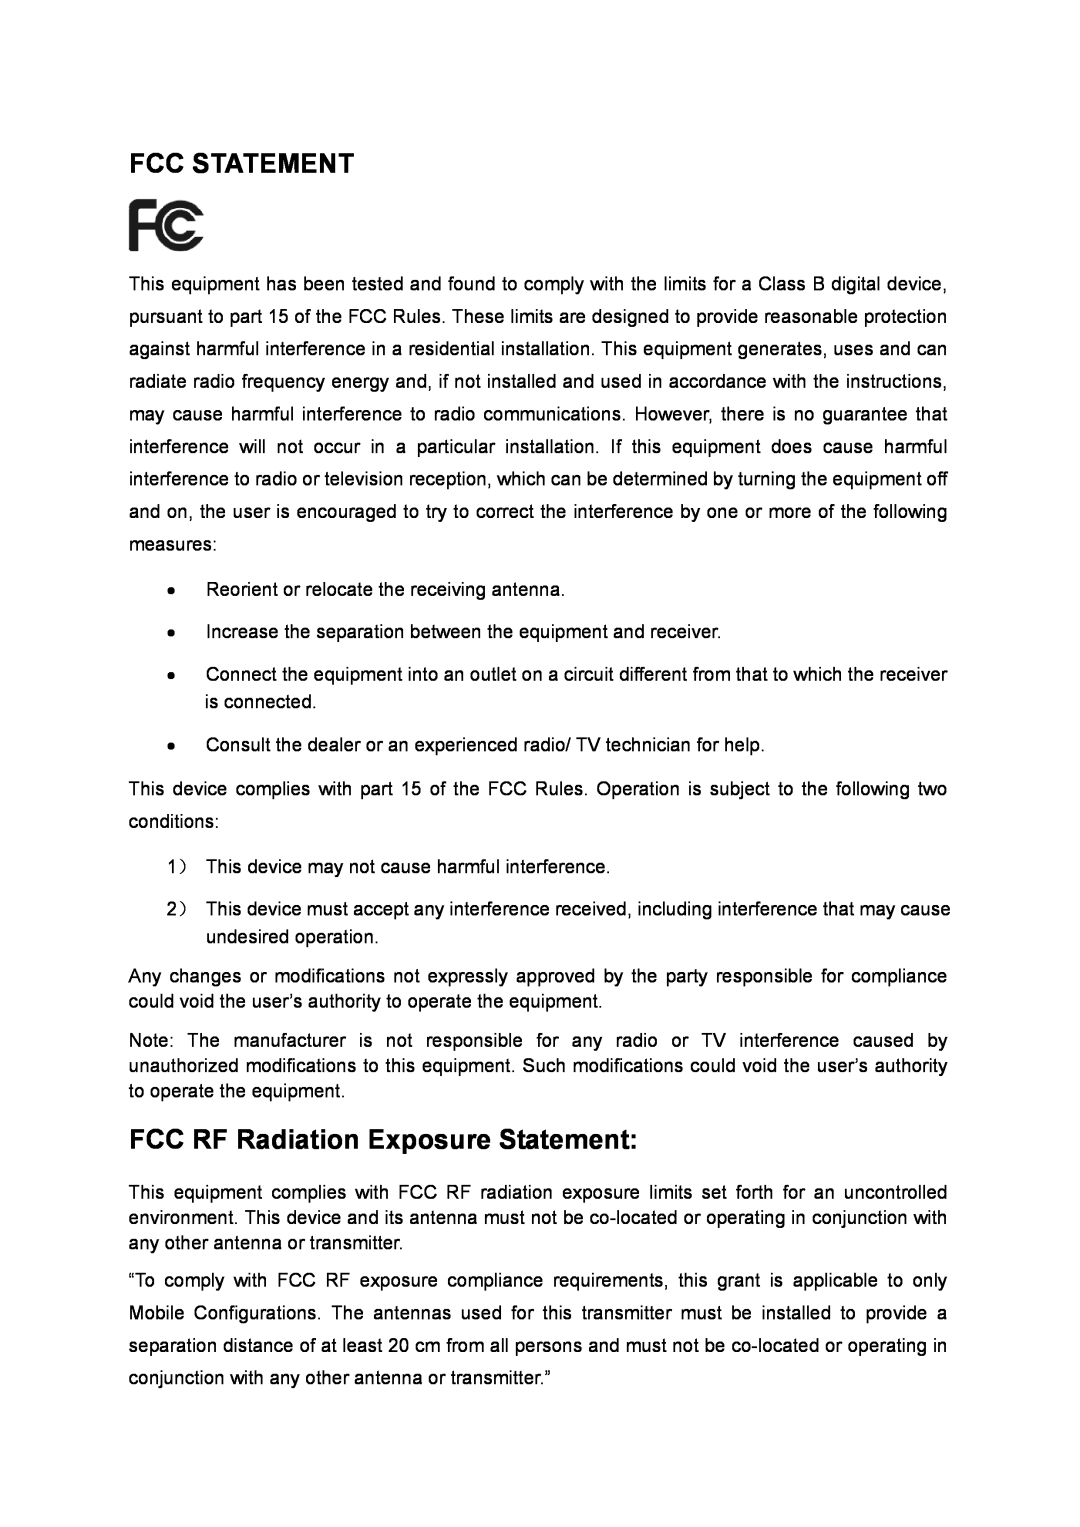 TP-Link AC1750 manual Fcc Statement, FCC RF Radiation Exposure Statement 